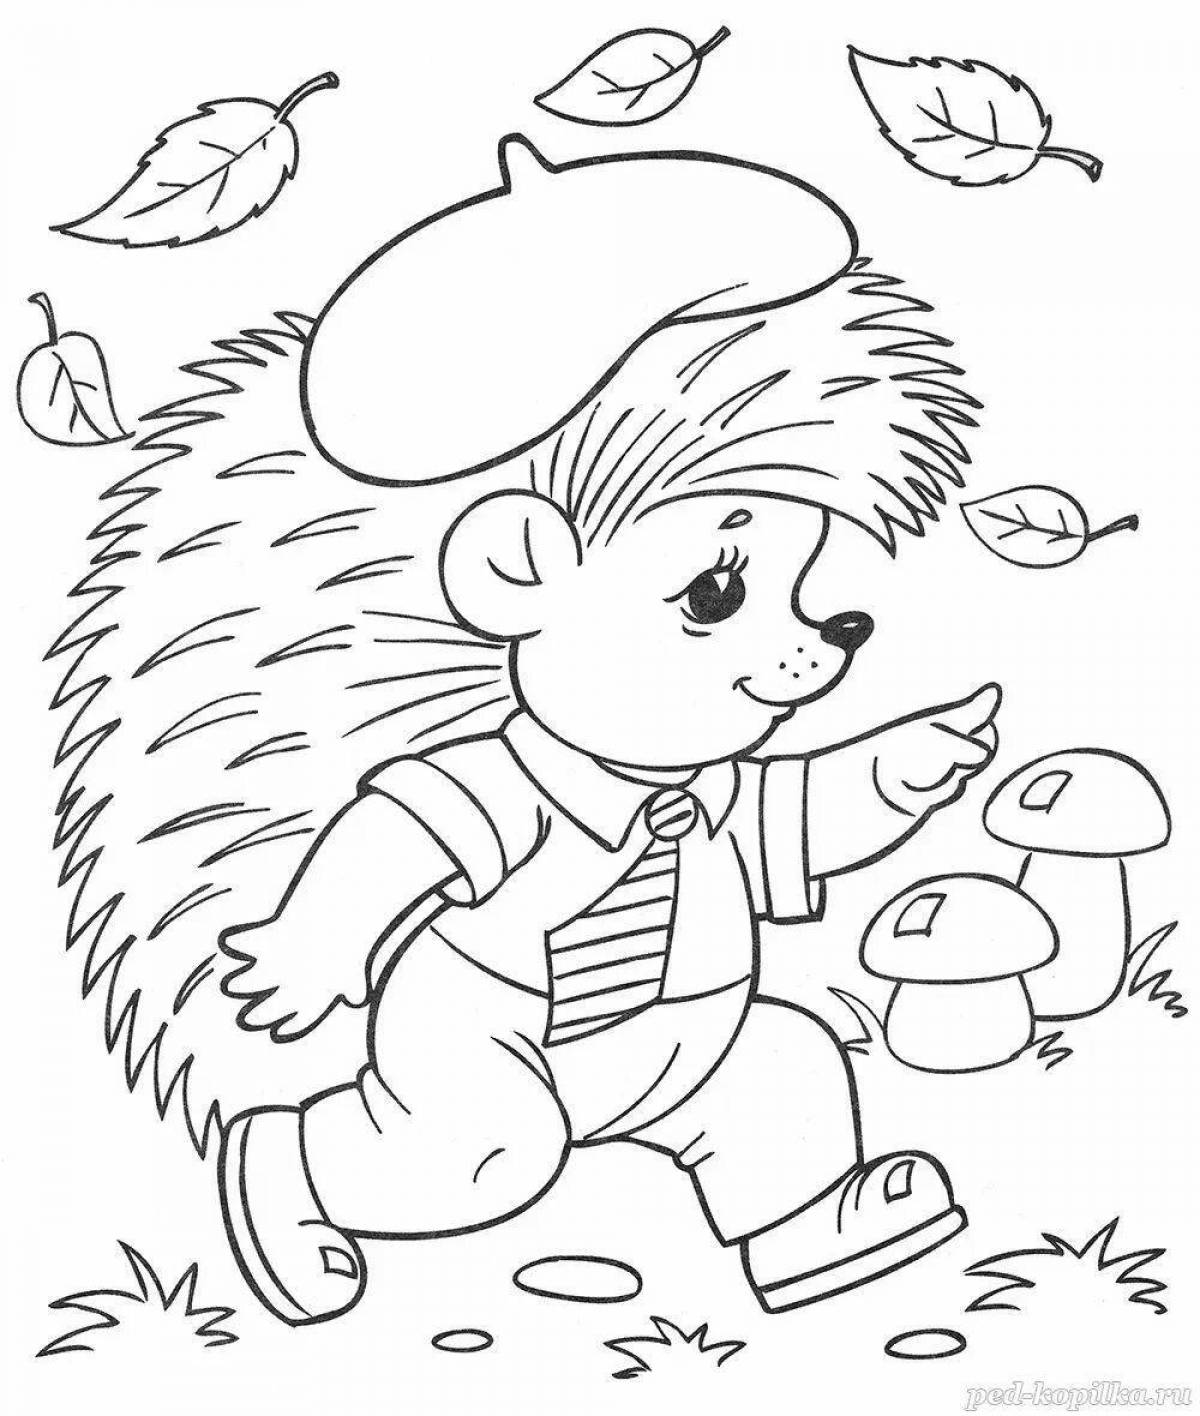 Jolly hedgehog with mushrooms